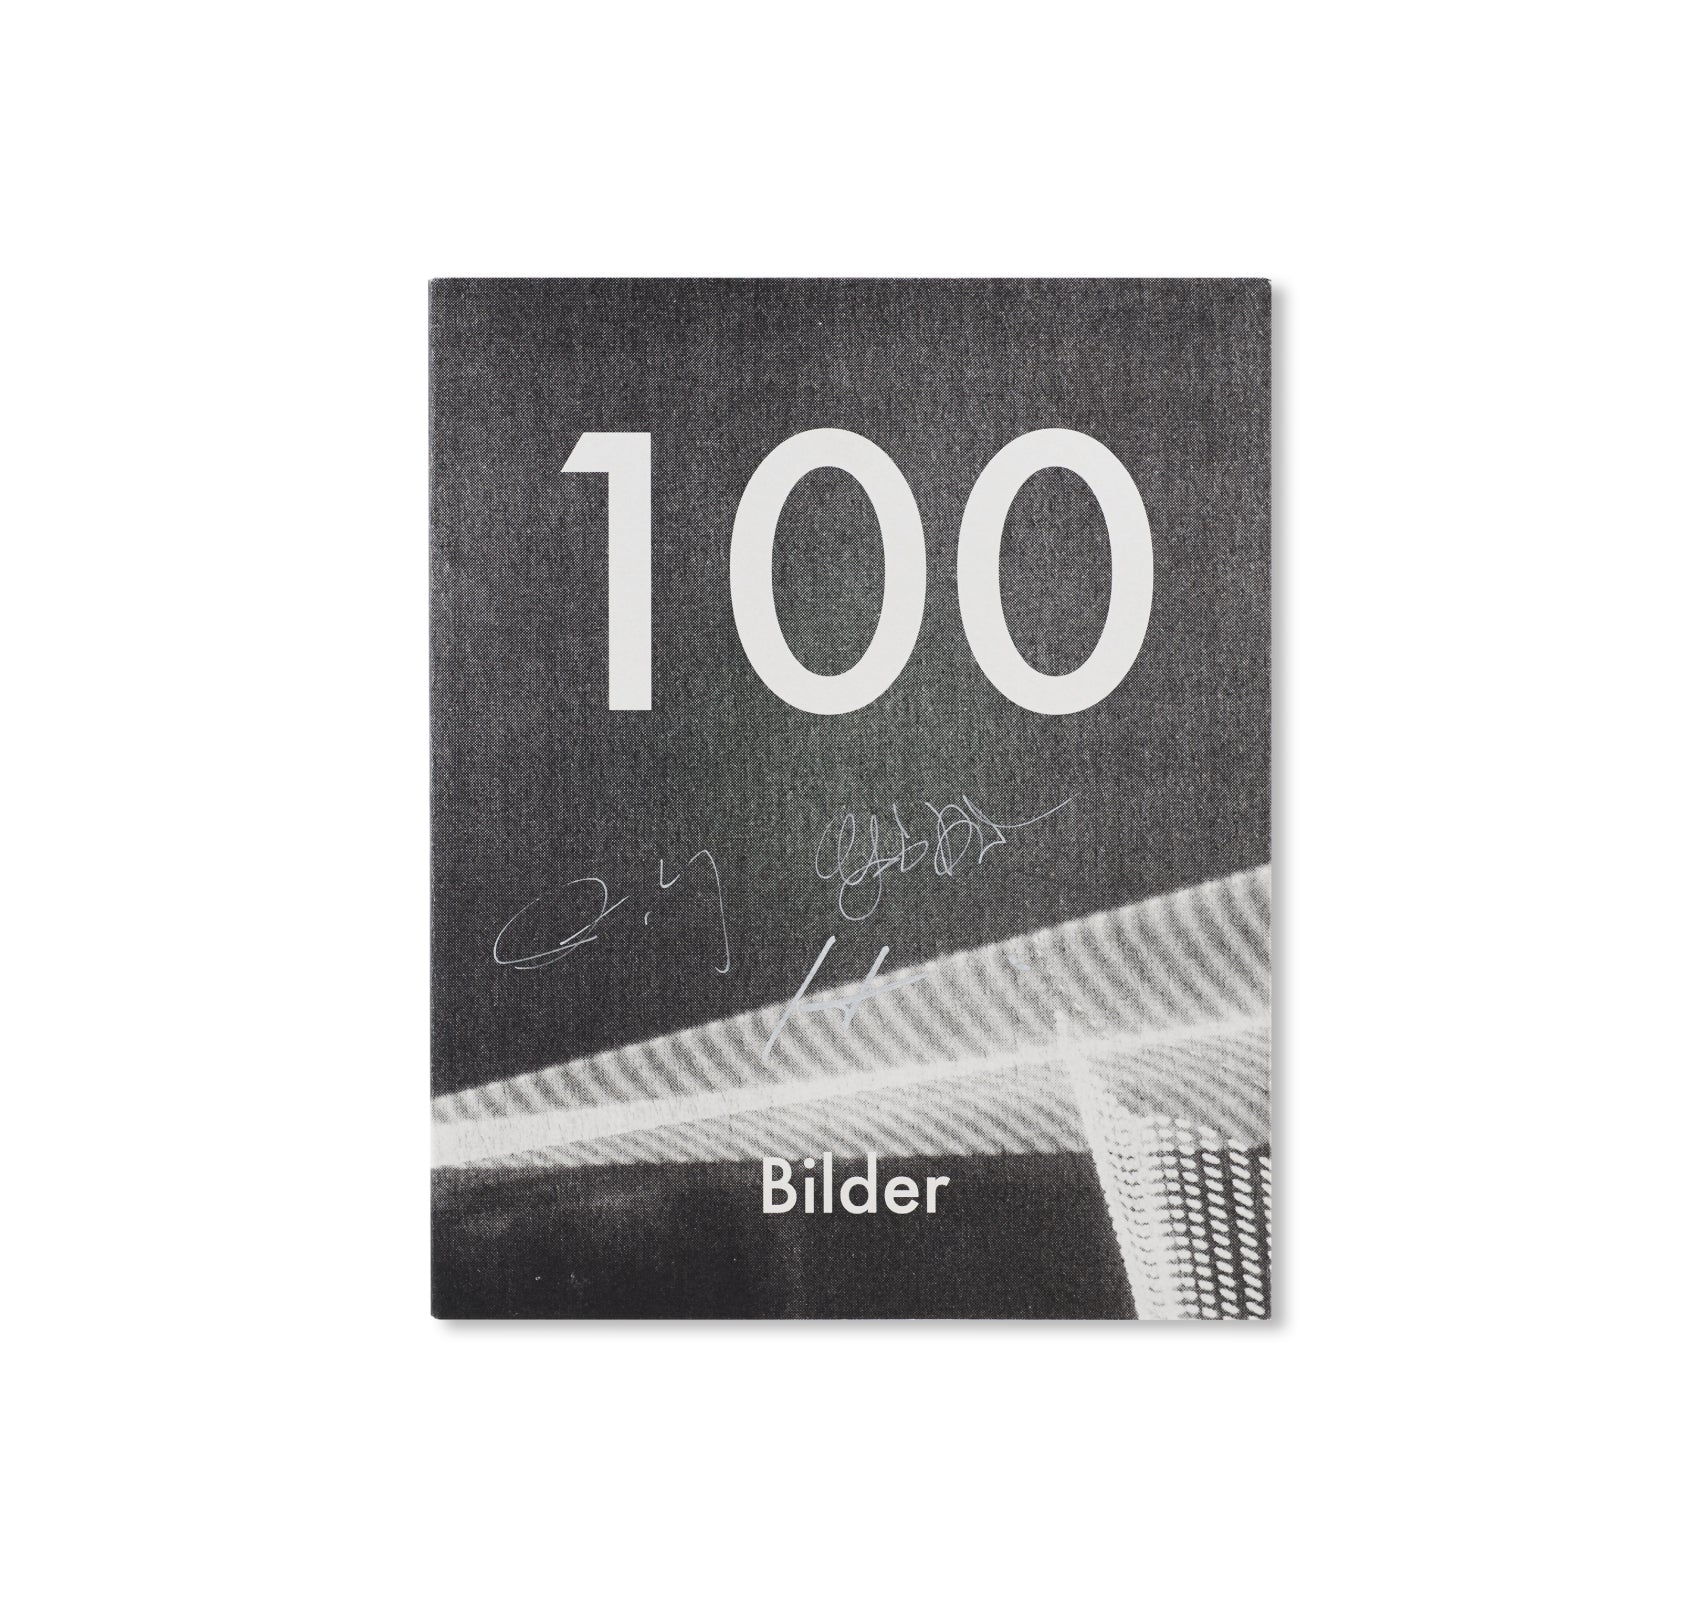 100 BILDER by Daisuke Yokota, Hiroshi Takizawa & Yoshi Kametani [SIGNED]